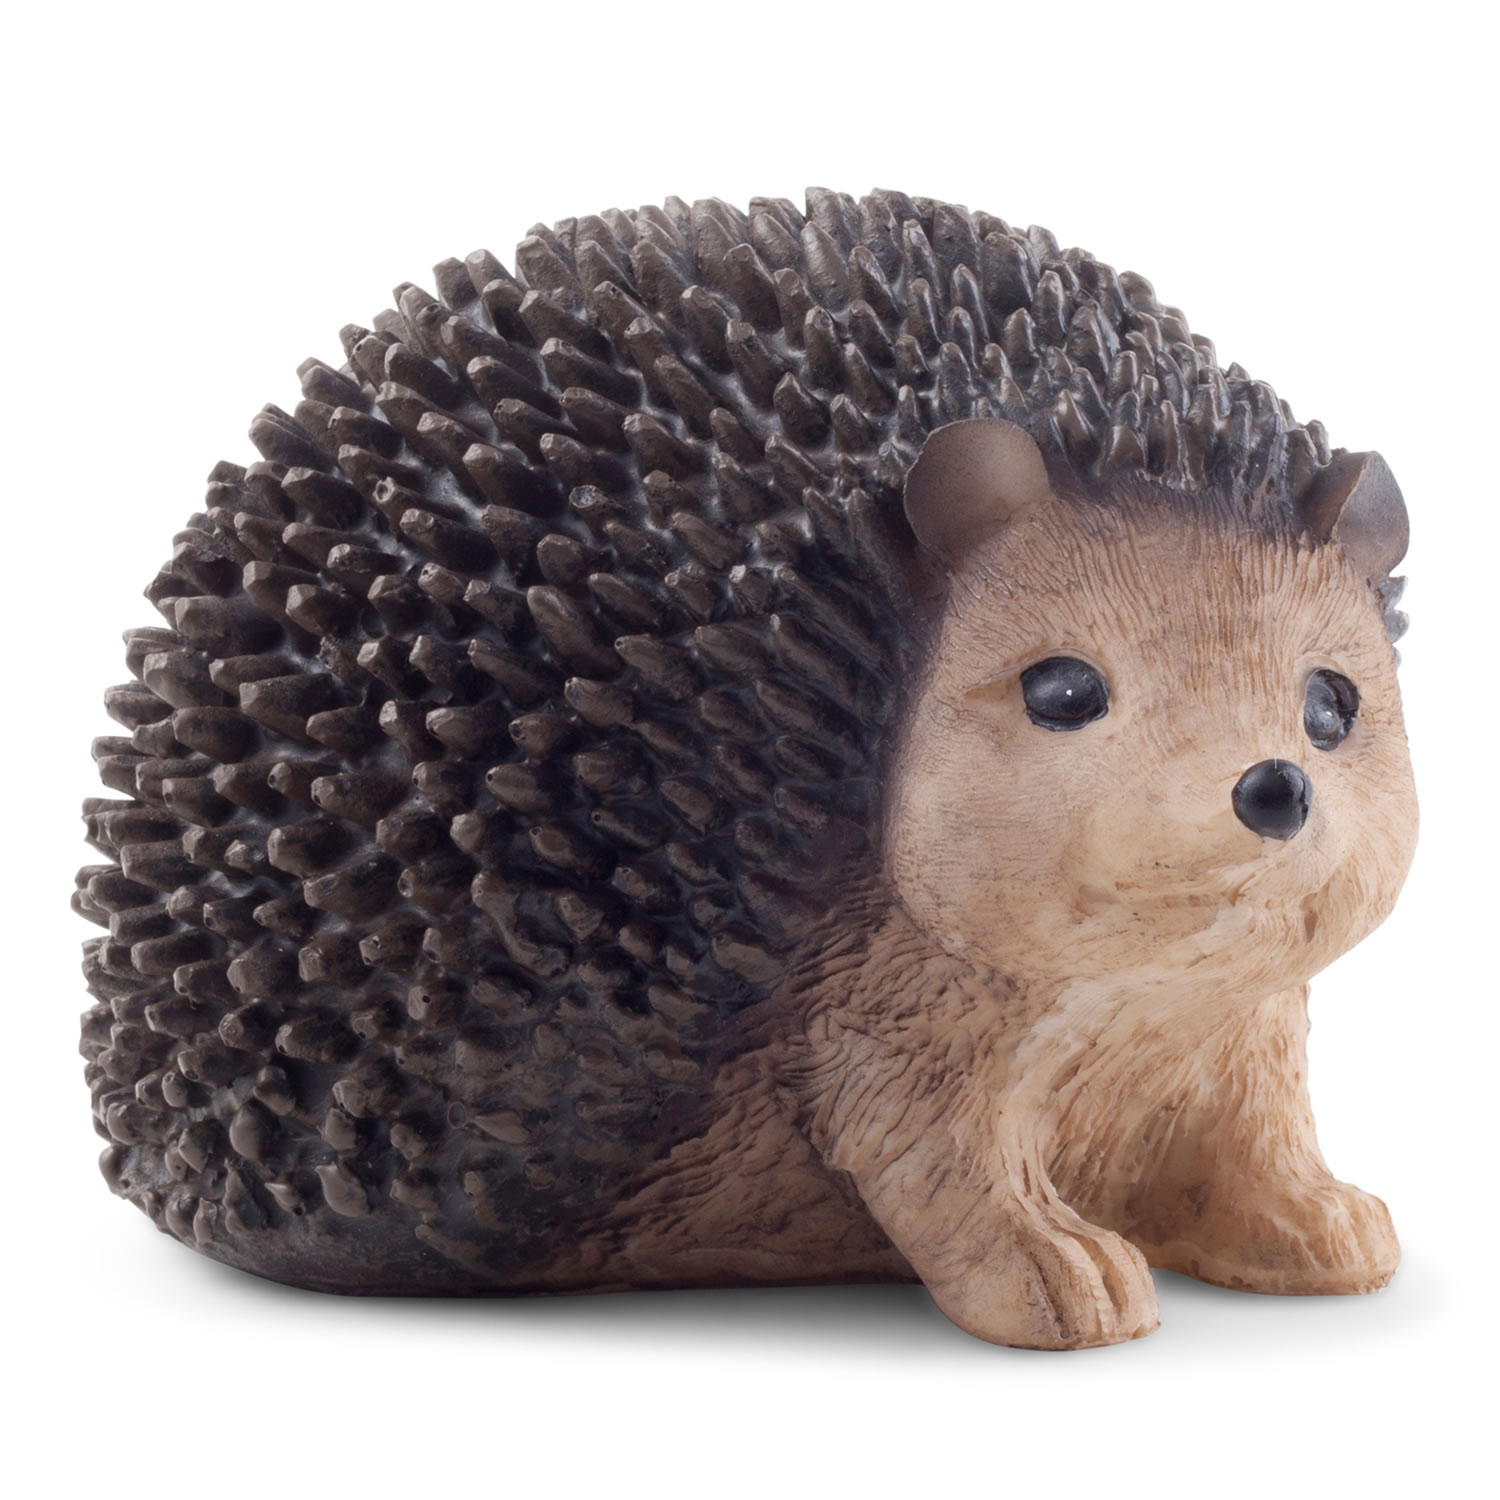 Cute Realistic Hedgehog Garden Ornament - £8.95 | Garden4Less UK Shop